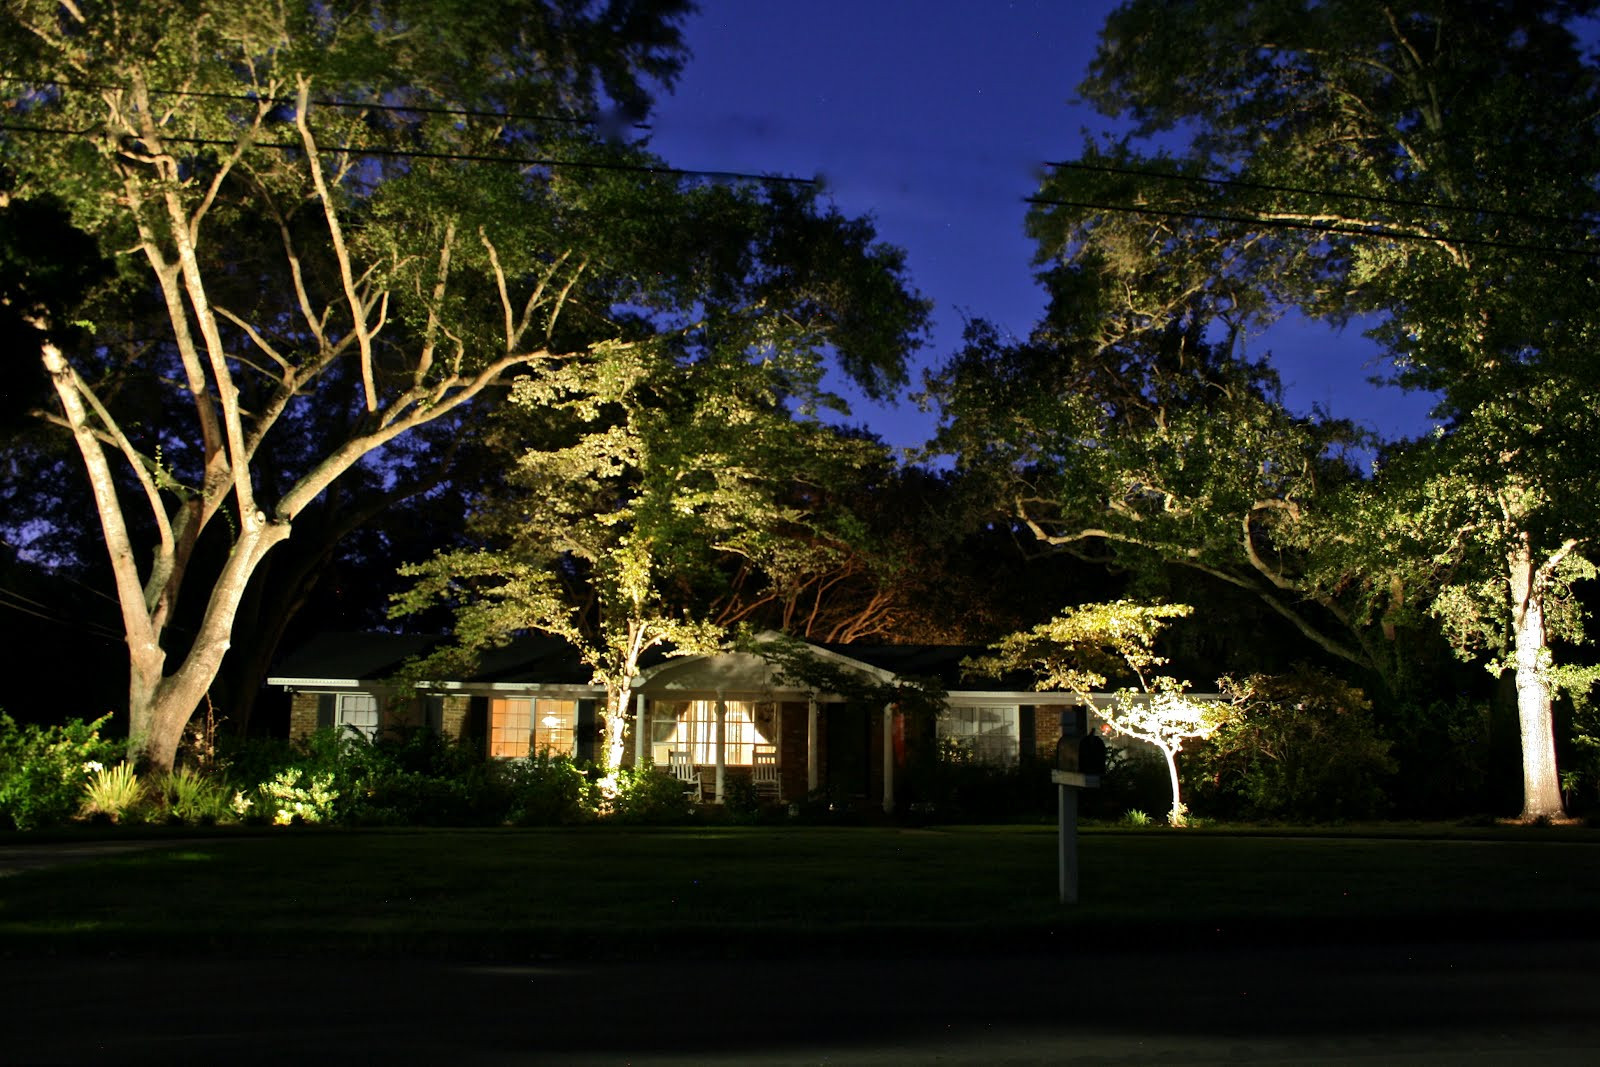 Best ideas about Led Landscape Lighting
. Save or Pin Carolina Landscape Lighting LED or Incandescent Now.